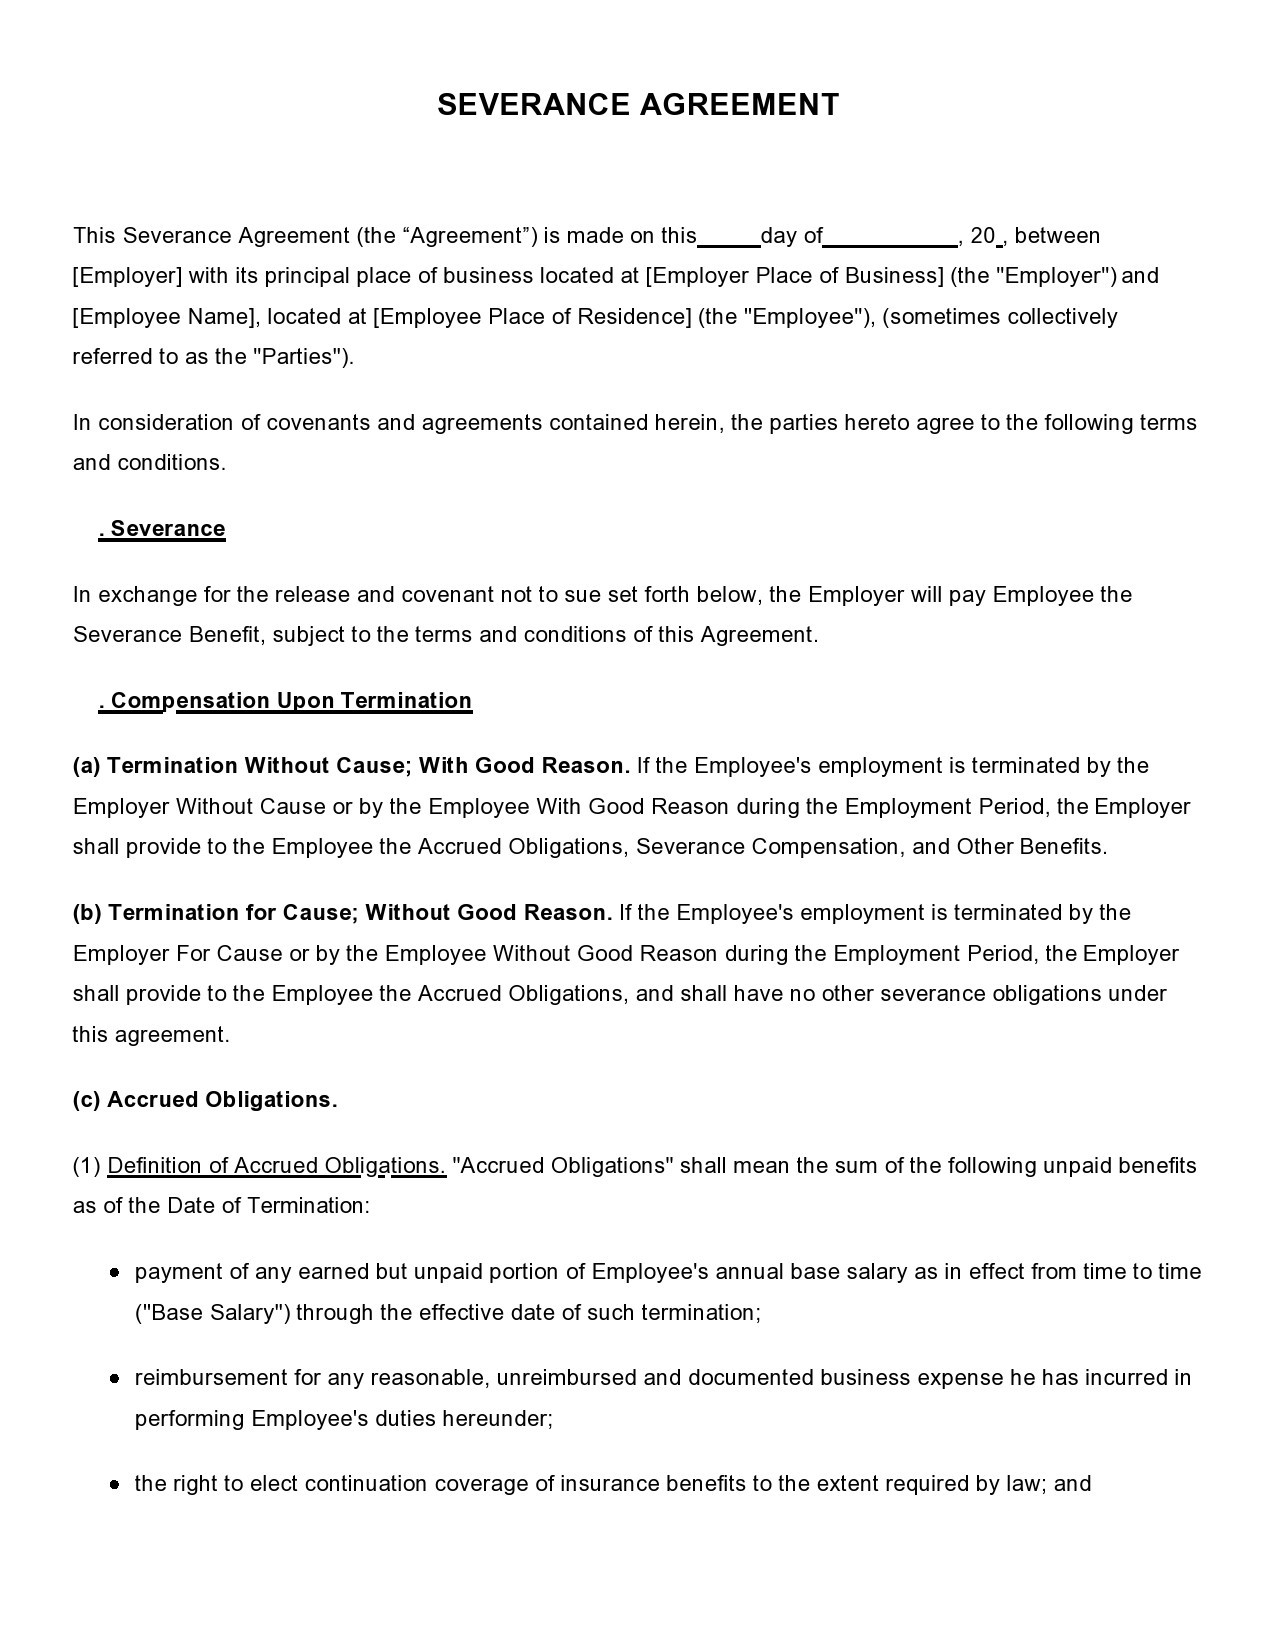 Free severance agreement template 06